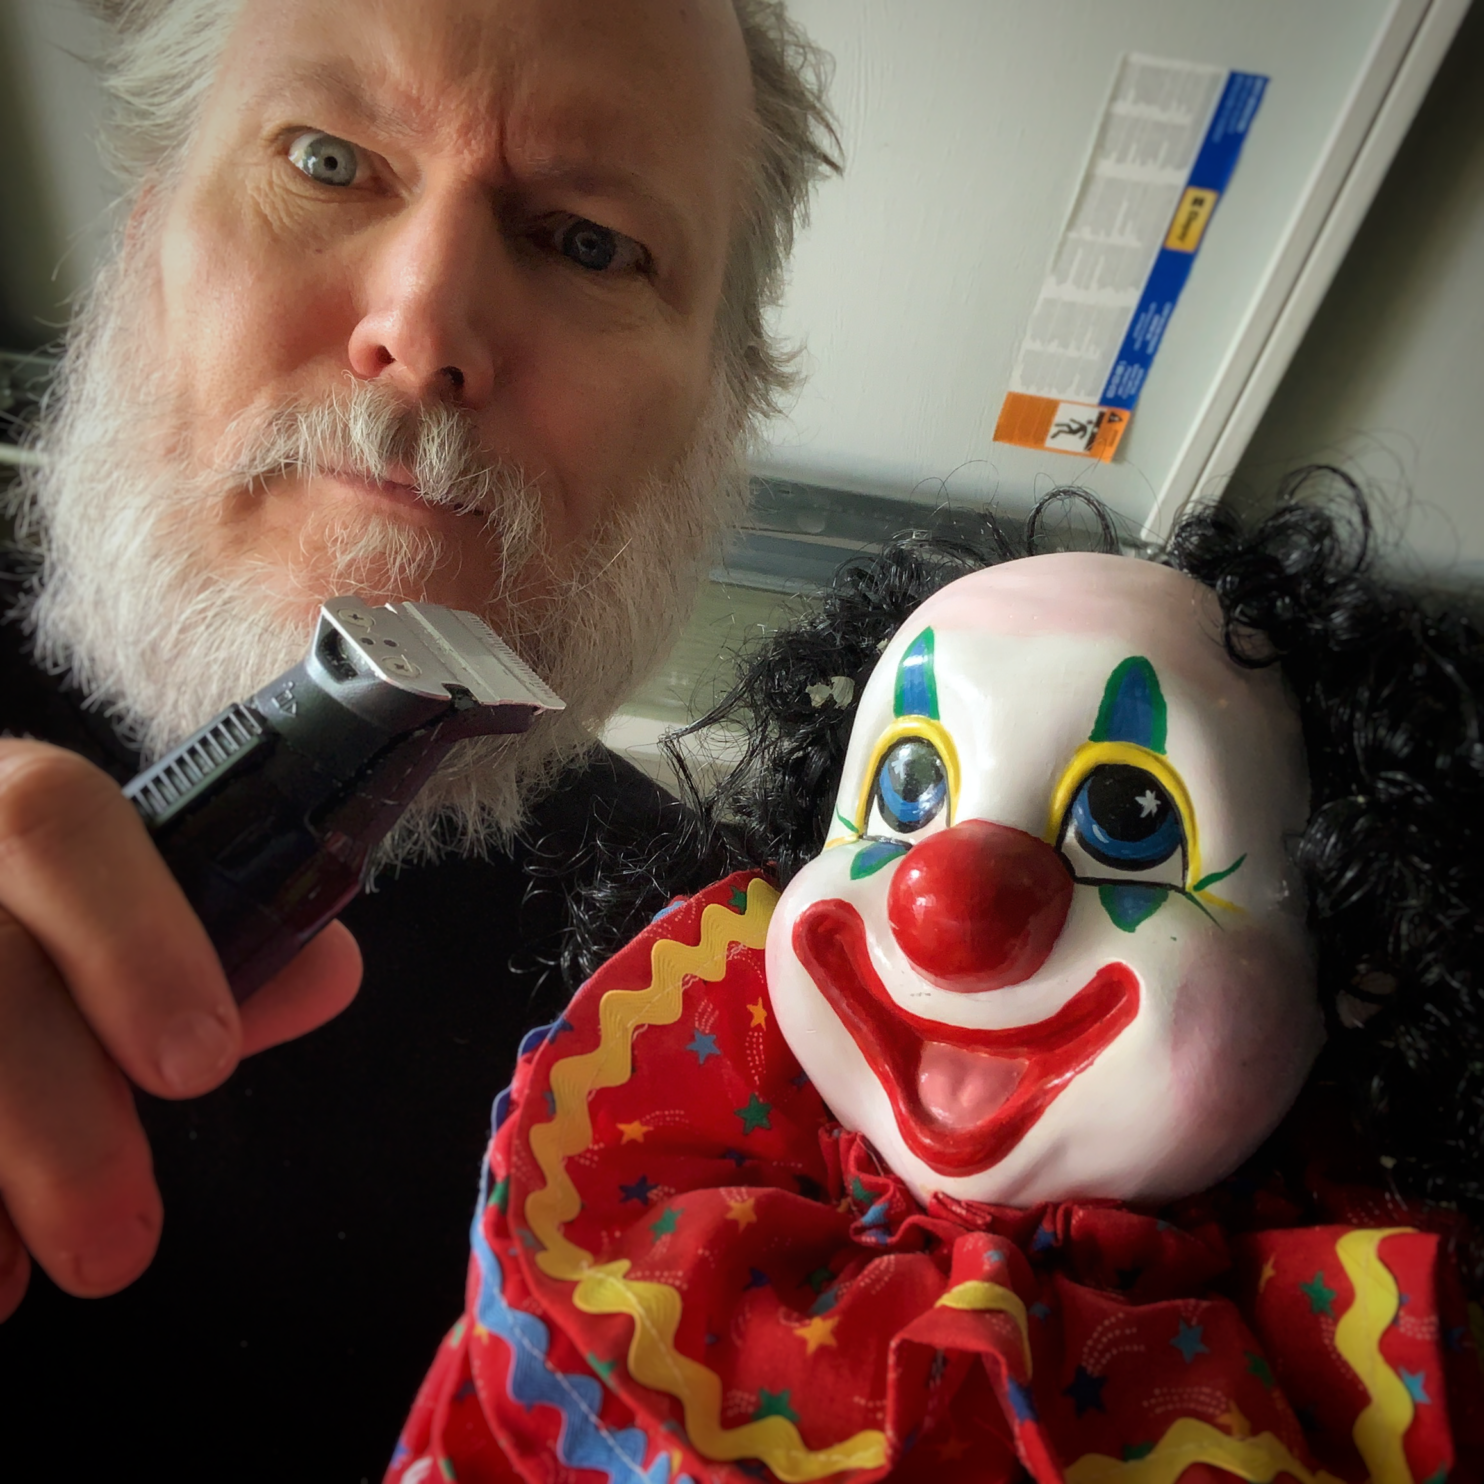 Jeff Kaiser, razor, and clown